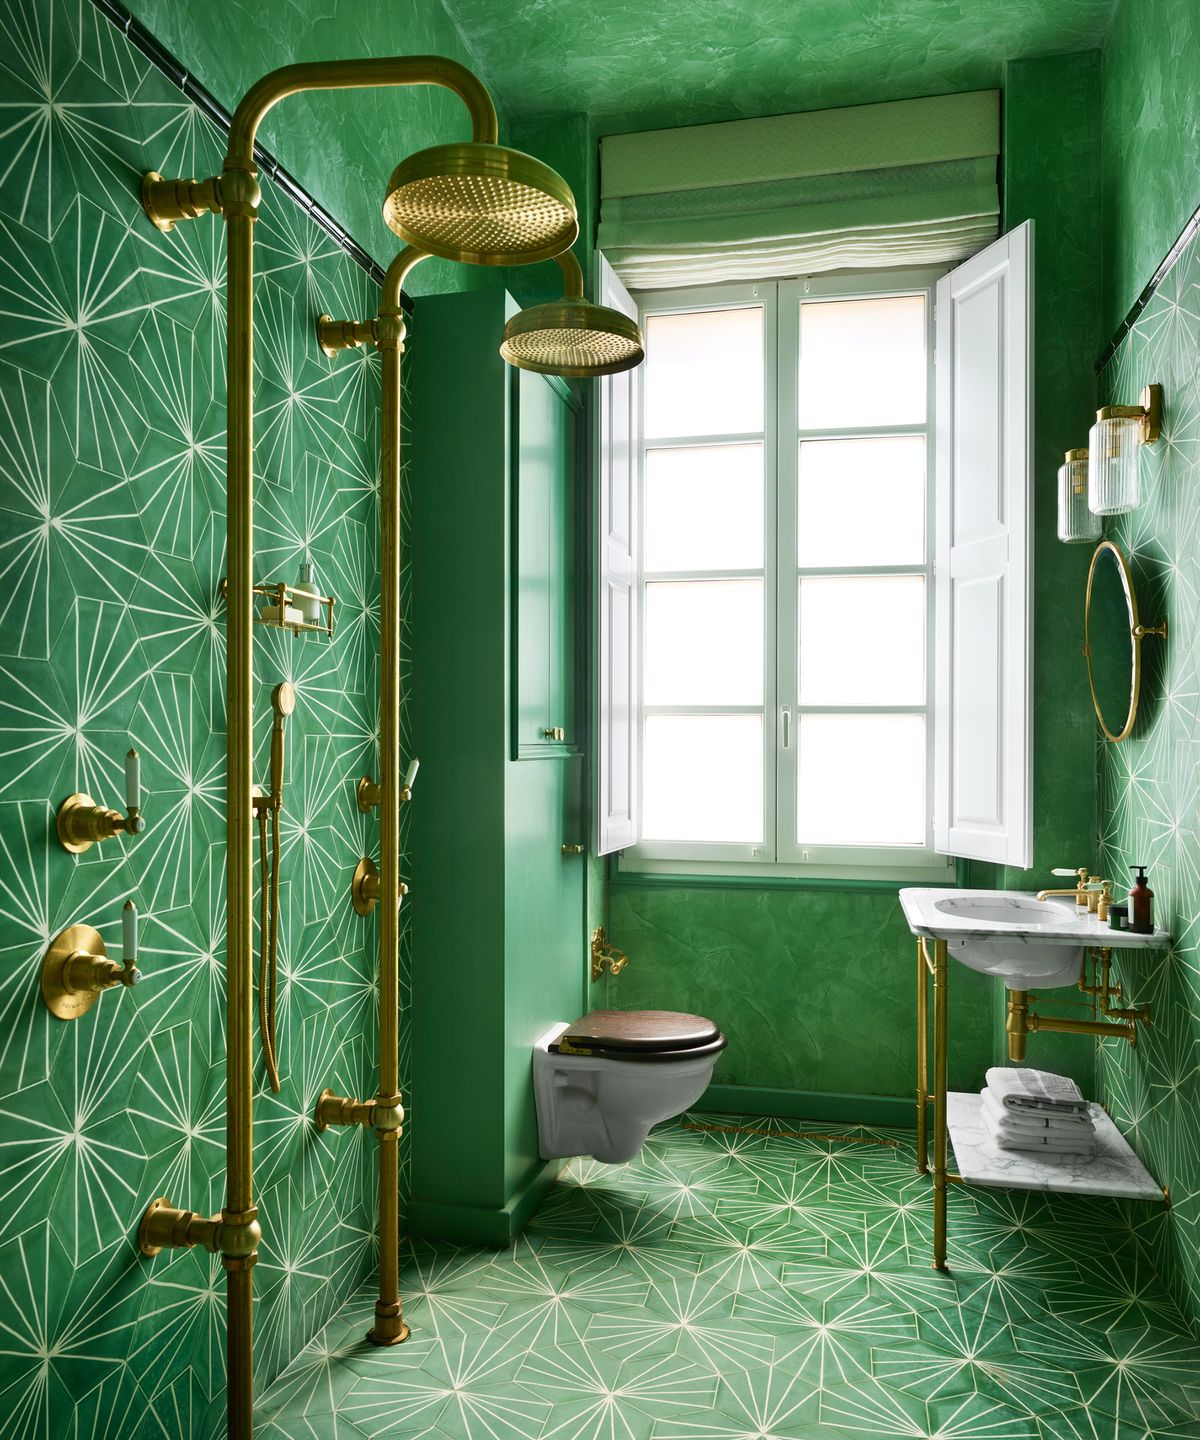 Small Bathroom Wall Tiles Design Ideas los angeles 2021